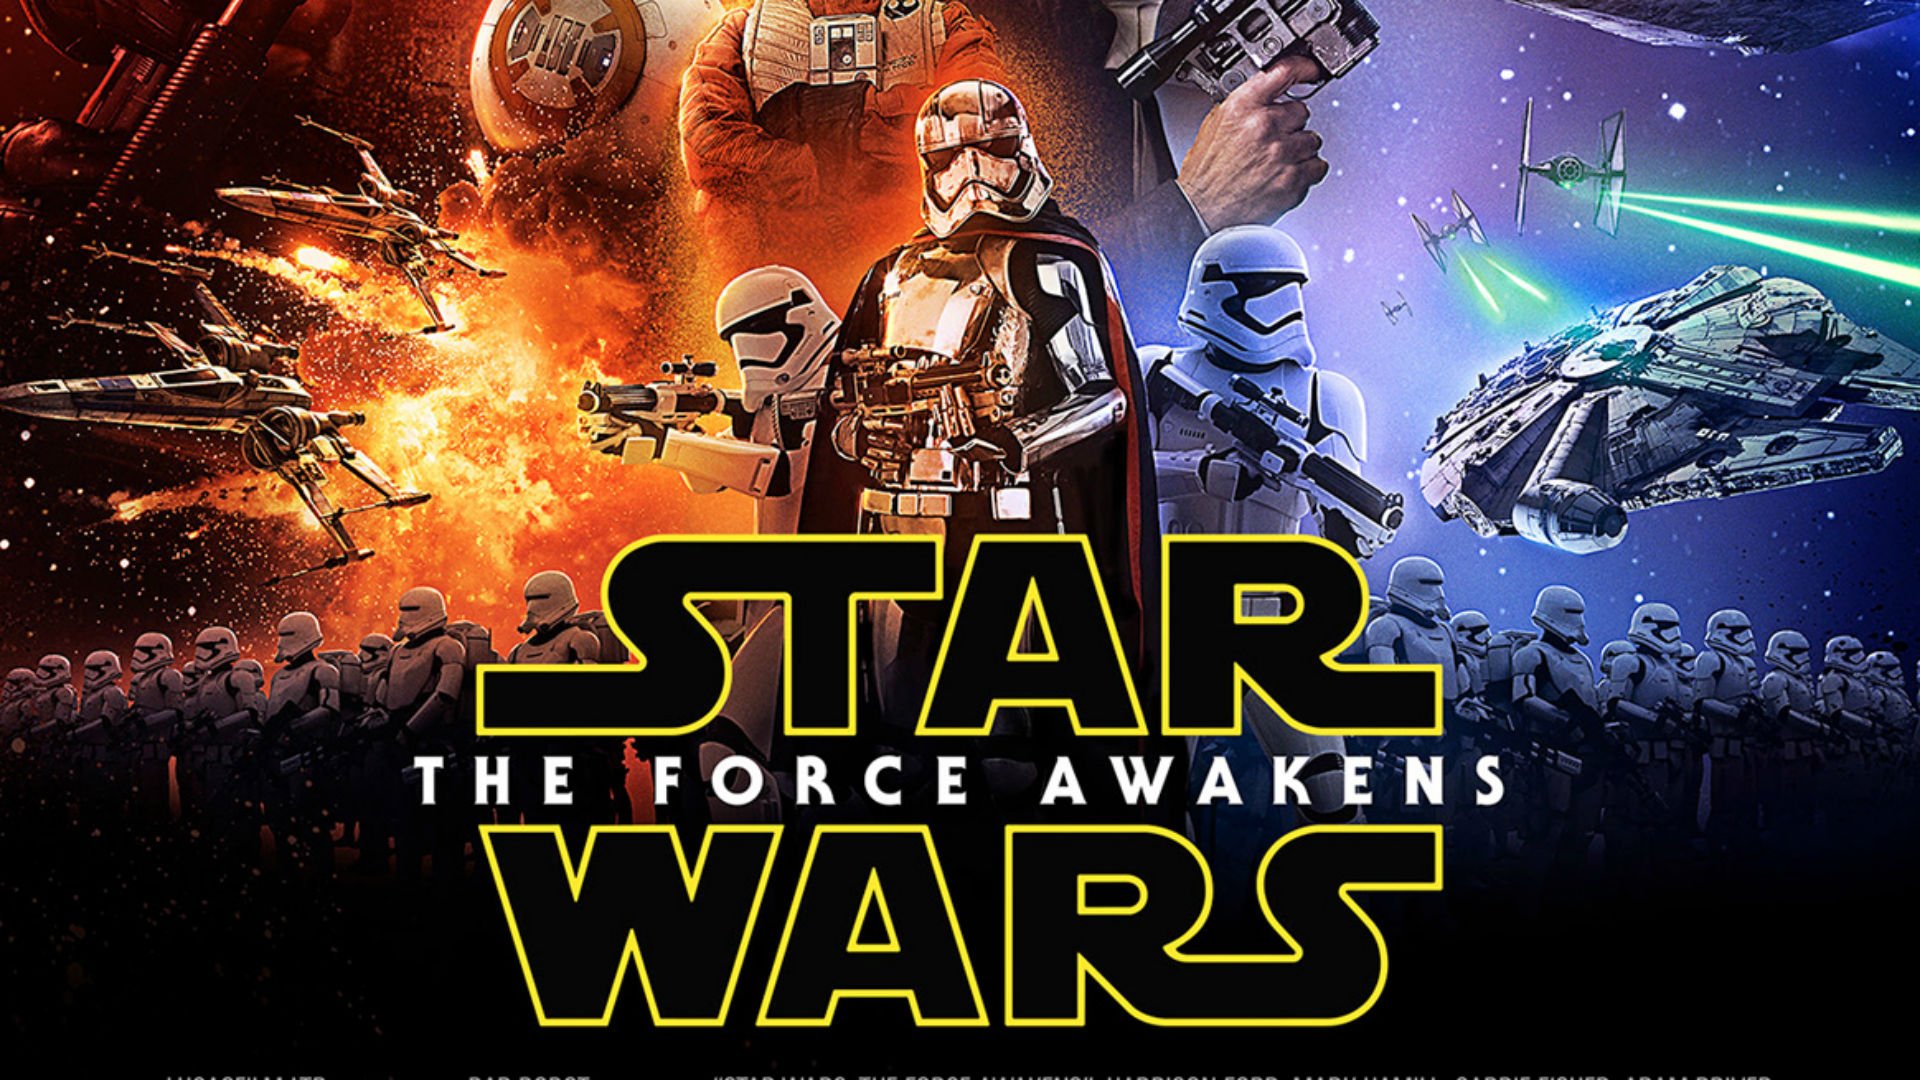 the force awakens full movie free online